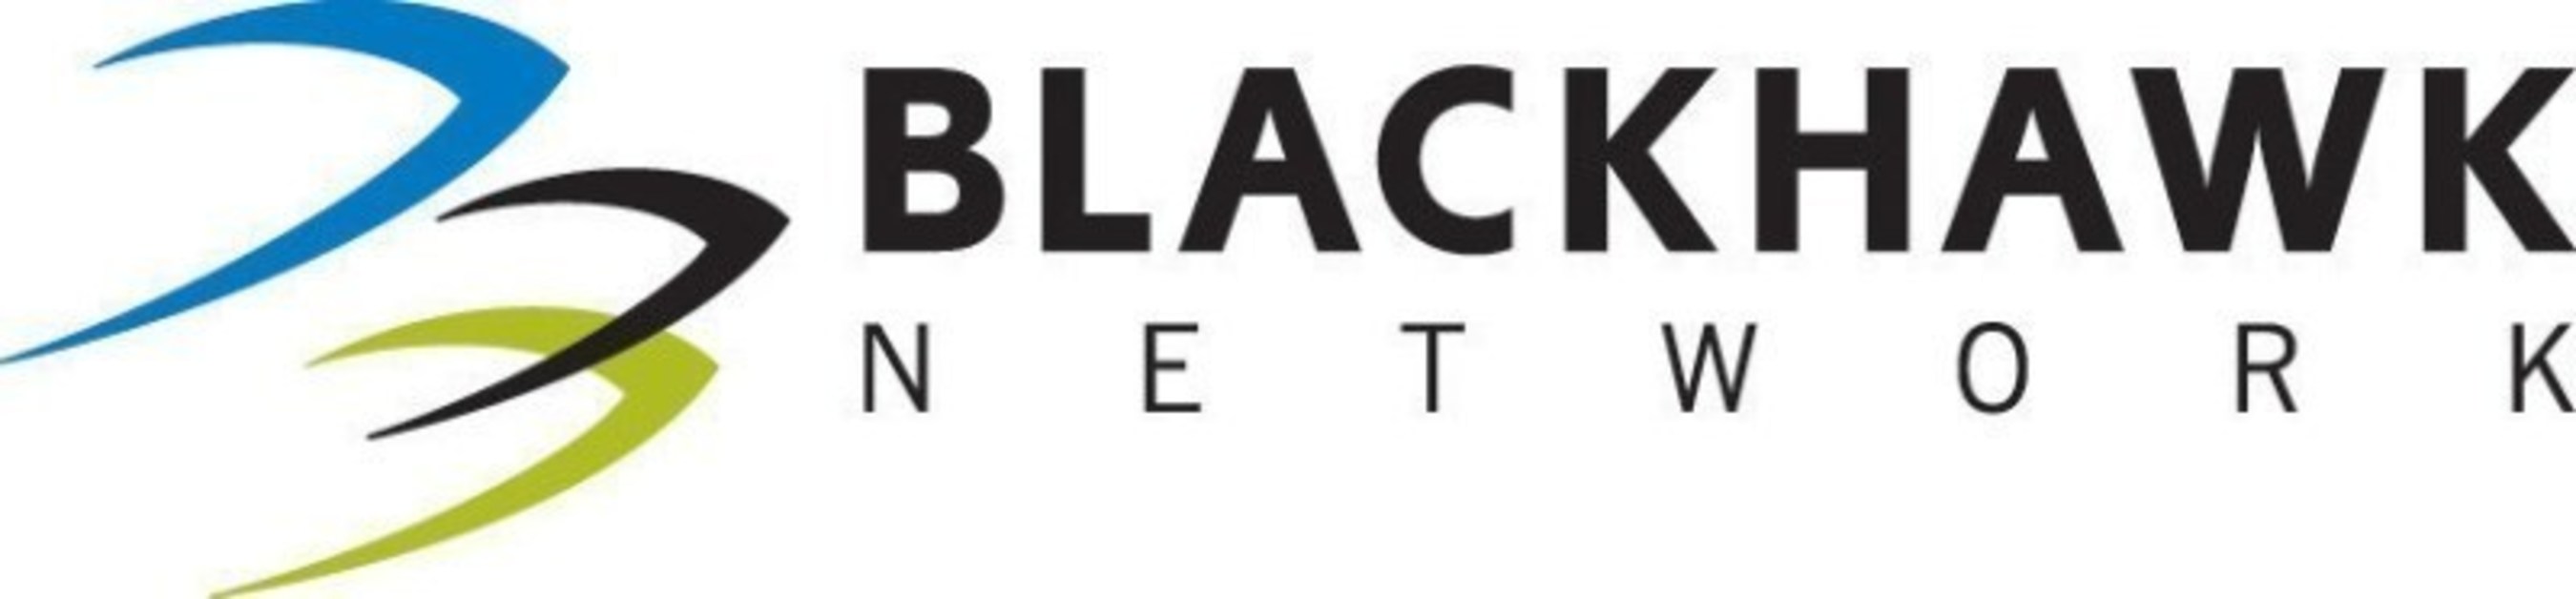 Blackhawk Network